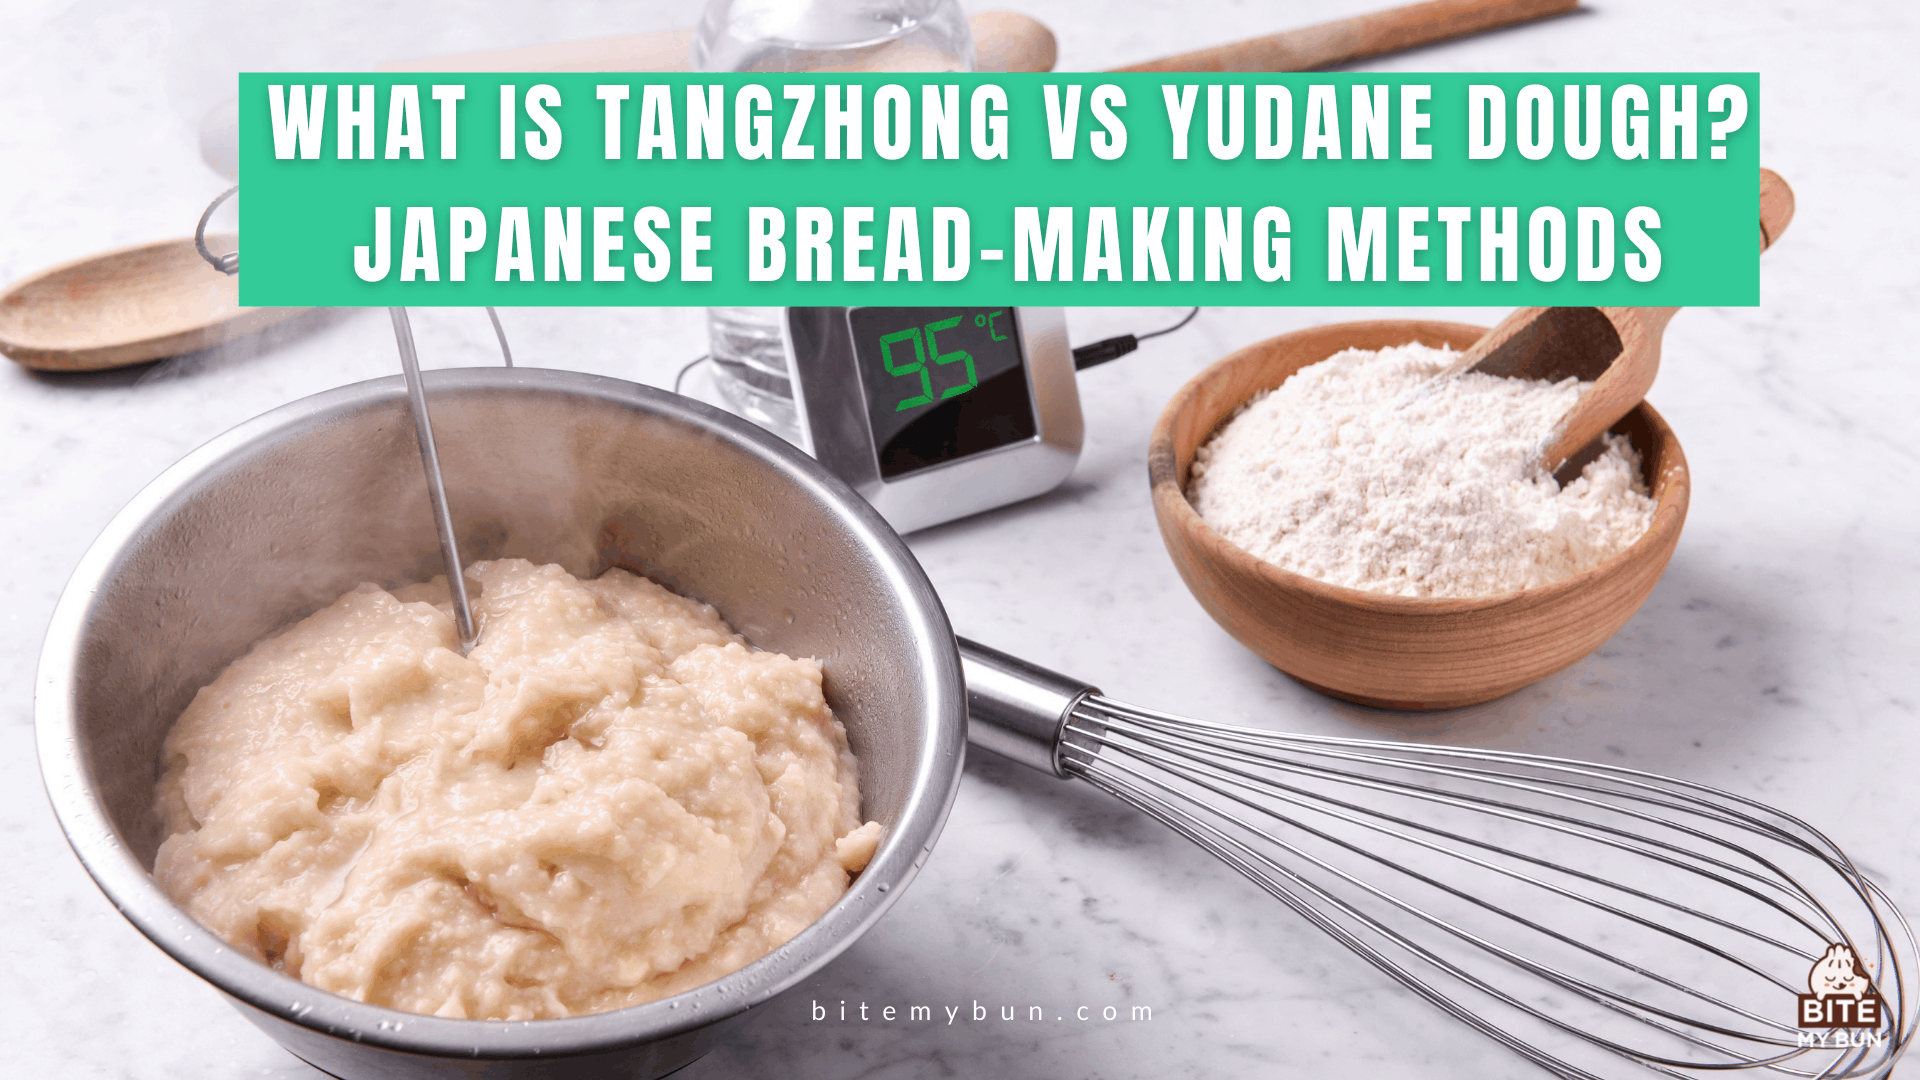 What is Tangzhong vs Yudane dough? Japanese bread-making methods